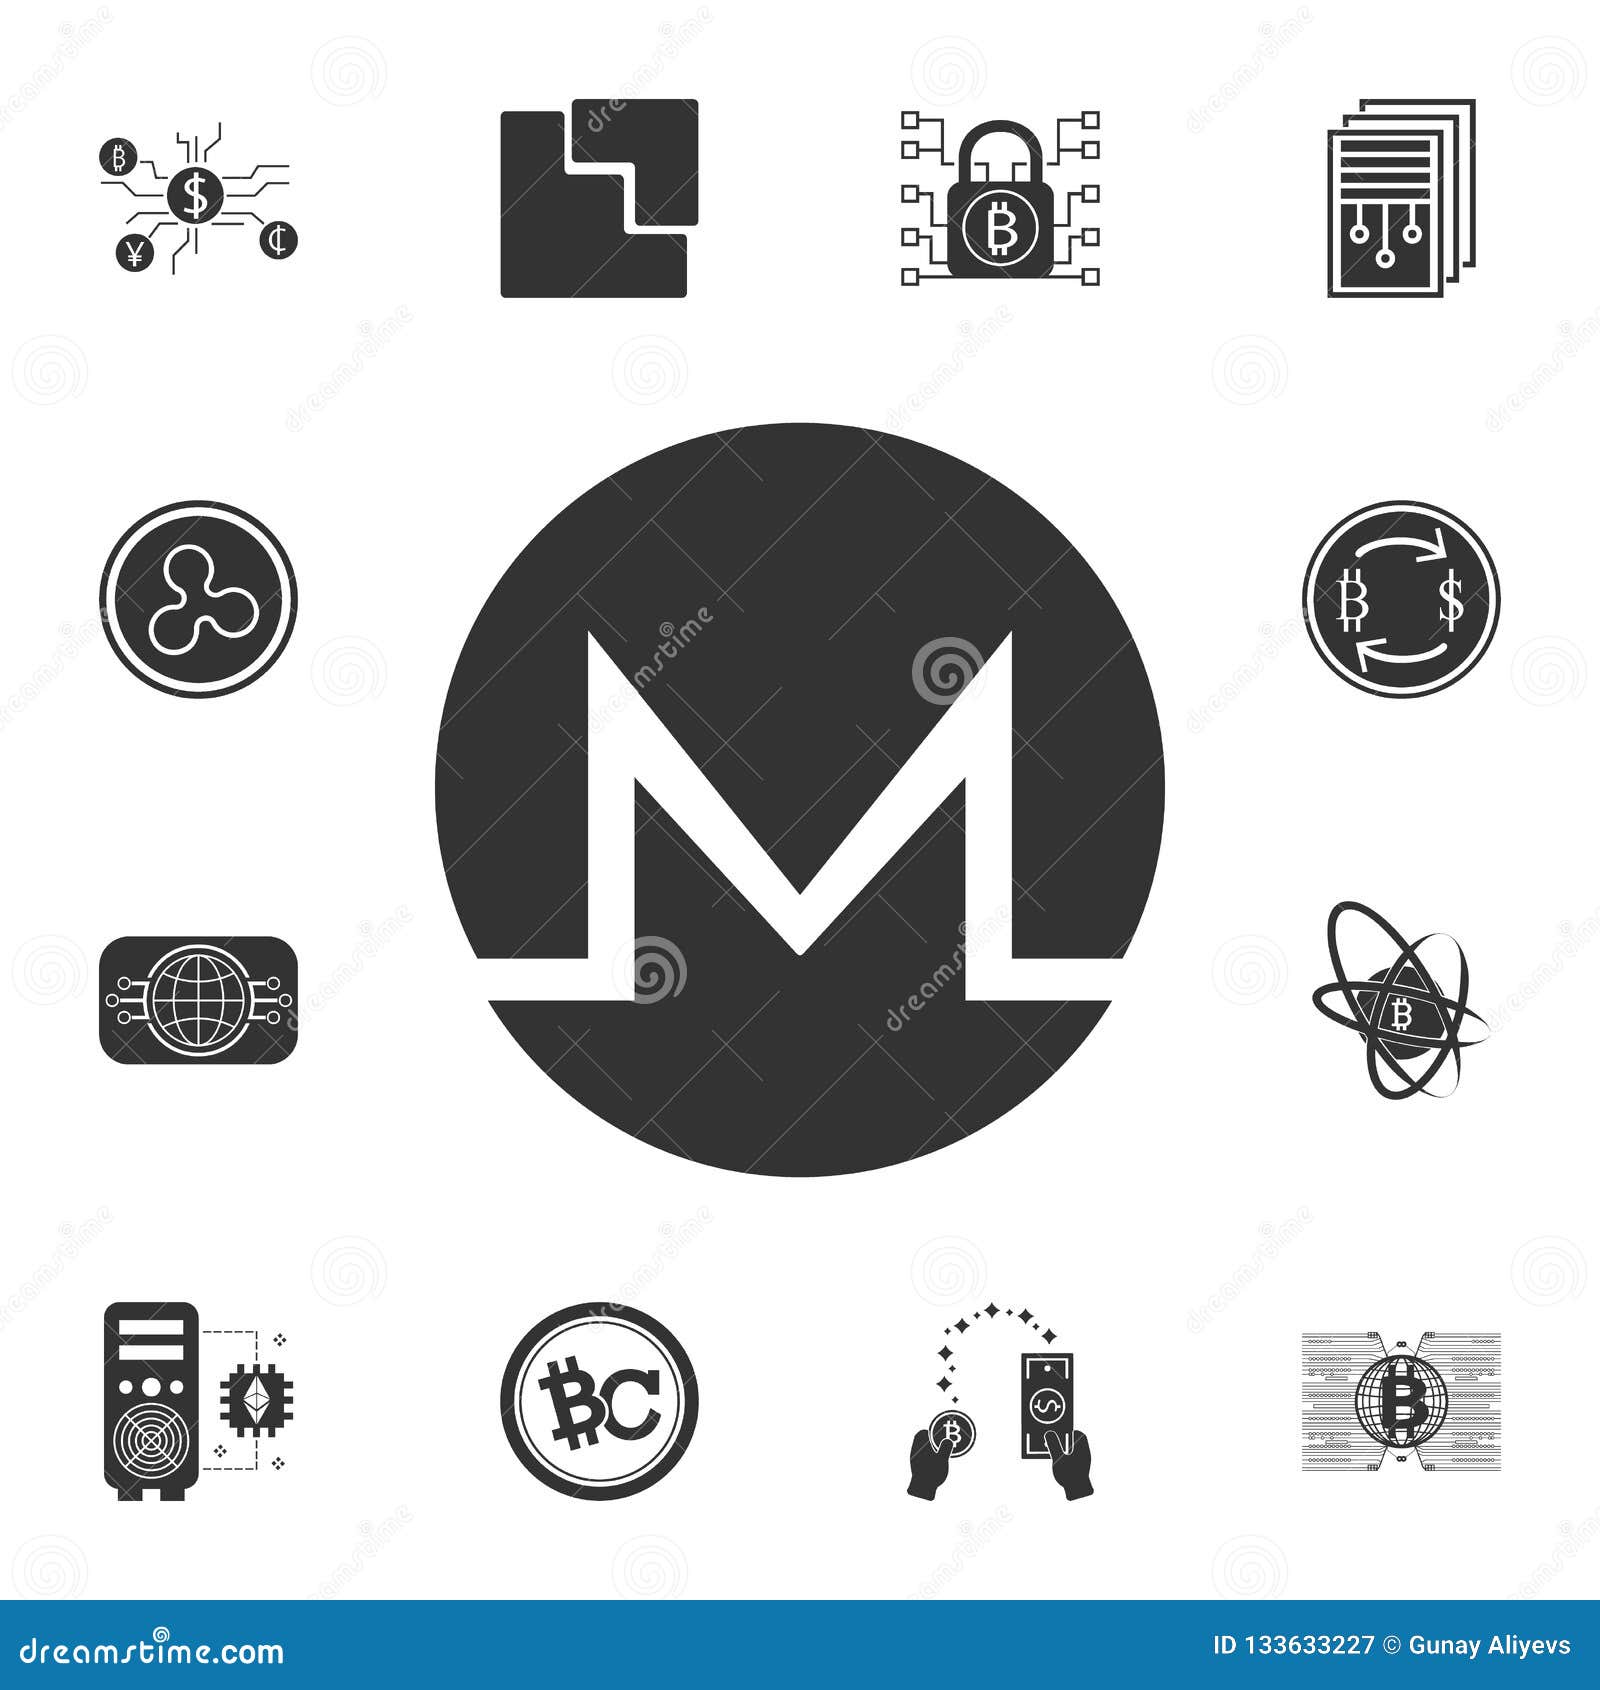 Monero Icon. Simple Illustration Of Monero Vector Icon For Web. Crypto